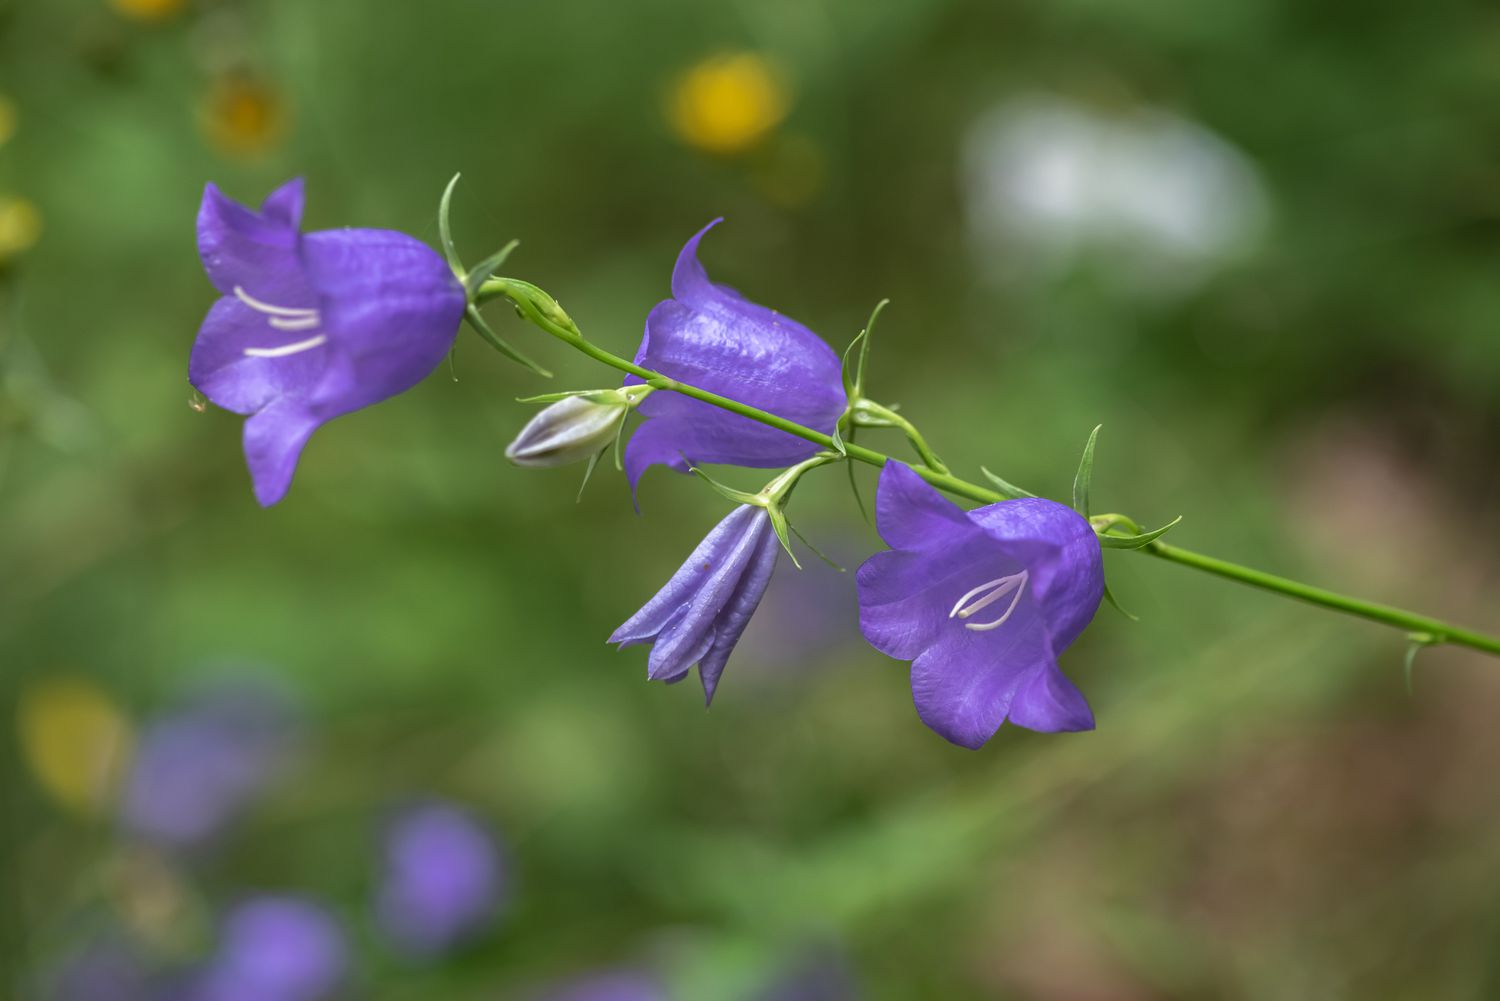 Hasenglöckchenpflanze mit violetten glockenförmigen Blüten an dünnem Stiel